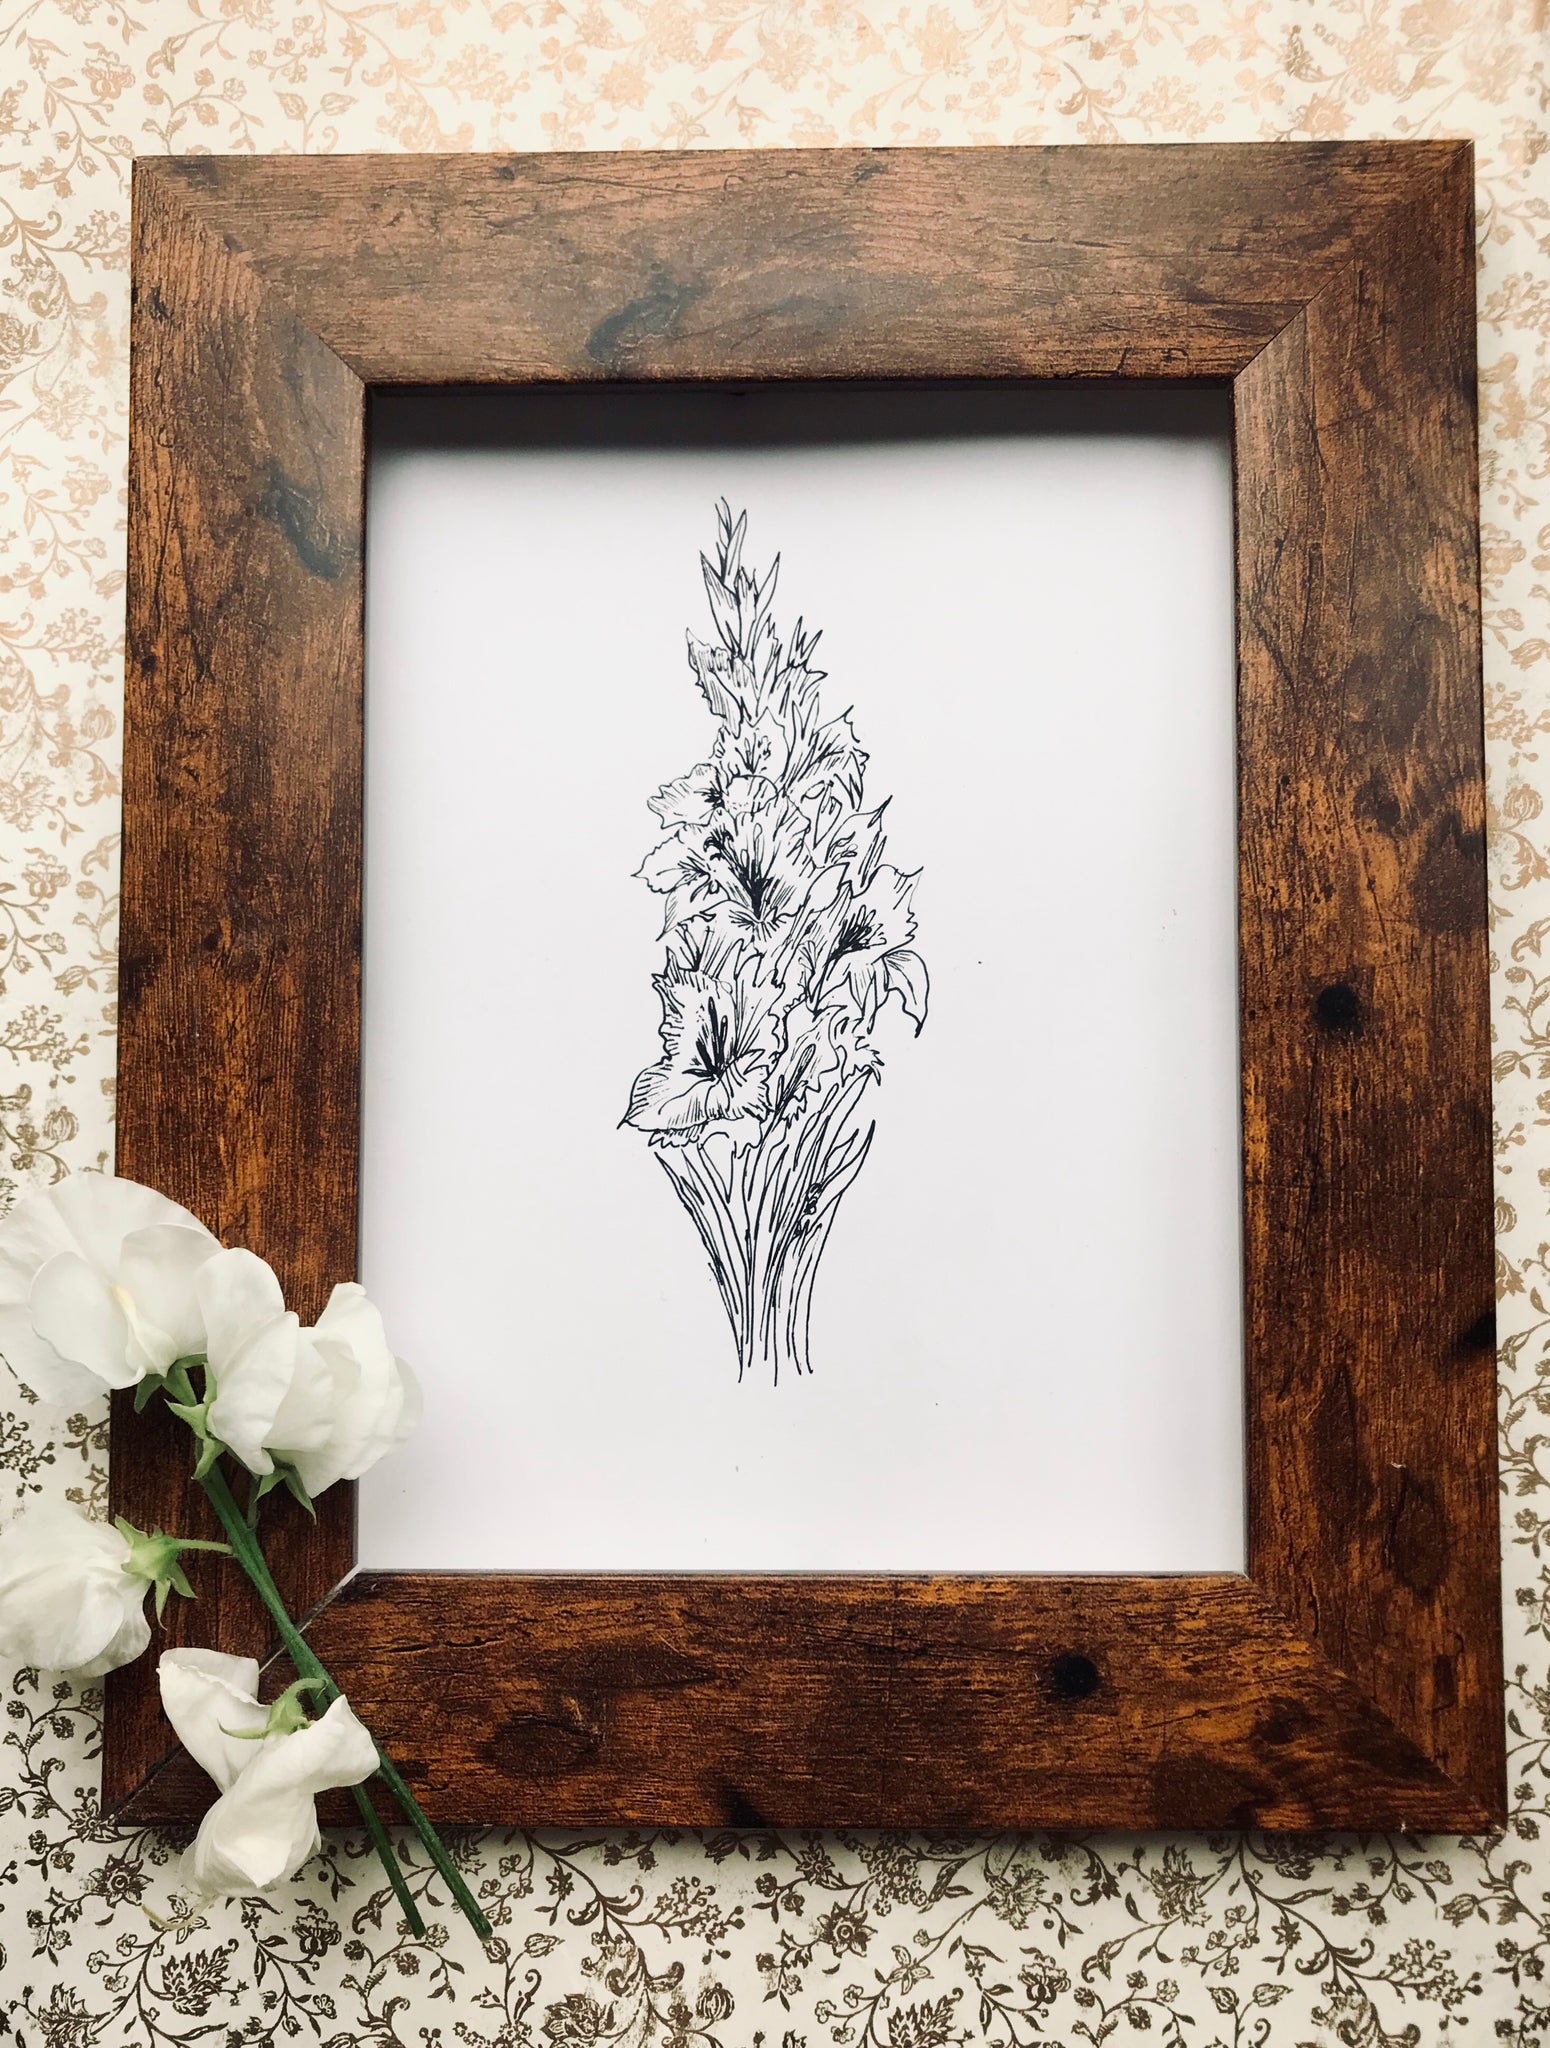 August birth flower illustration - Gladiolus